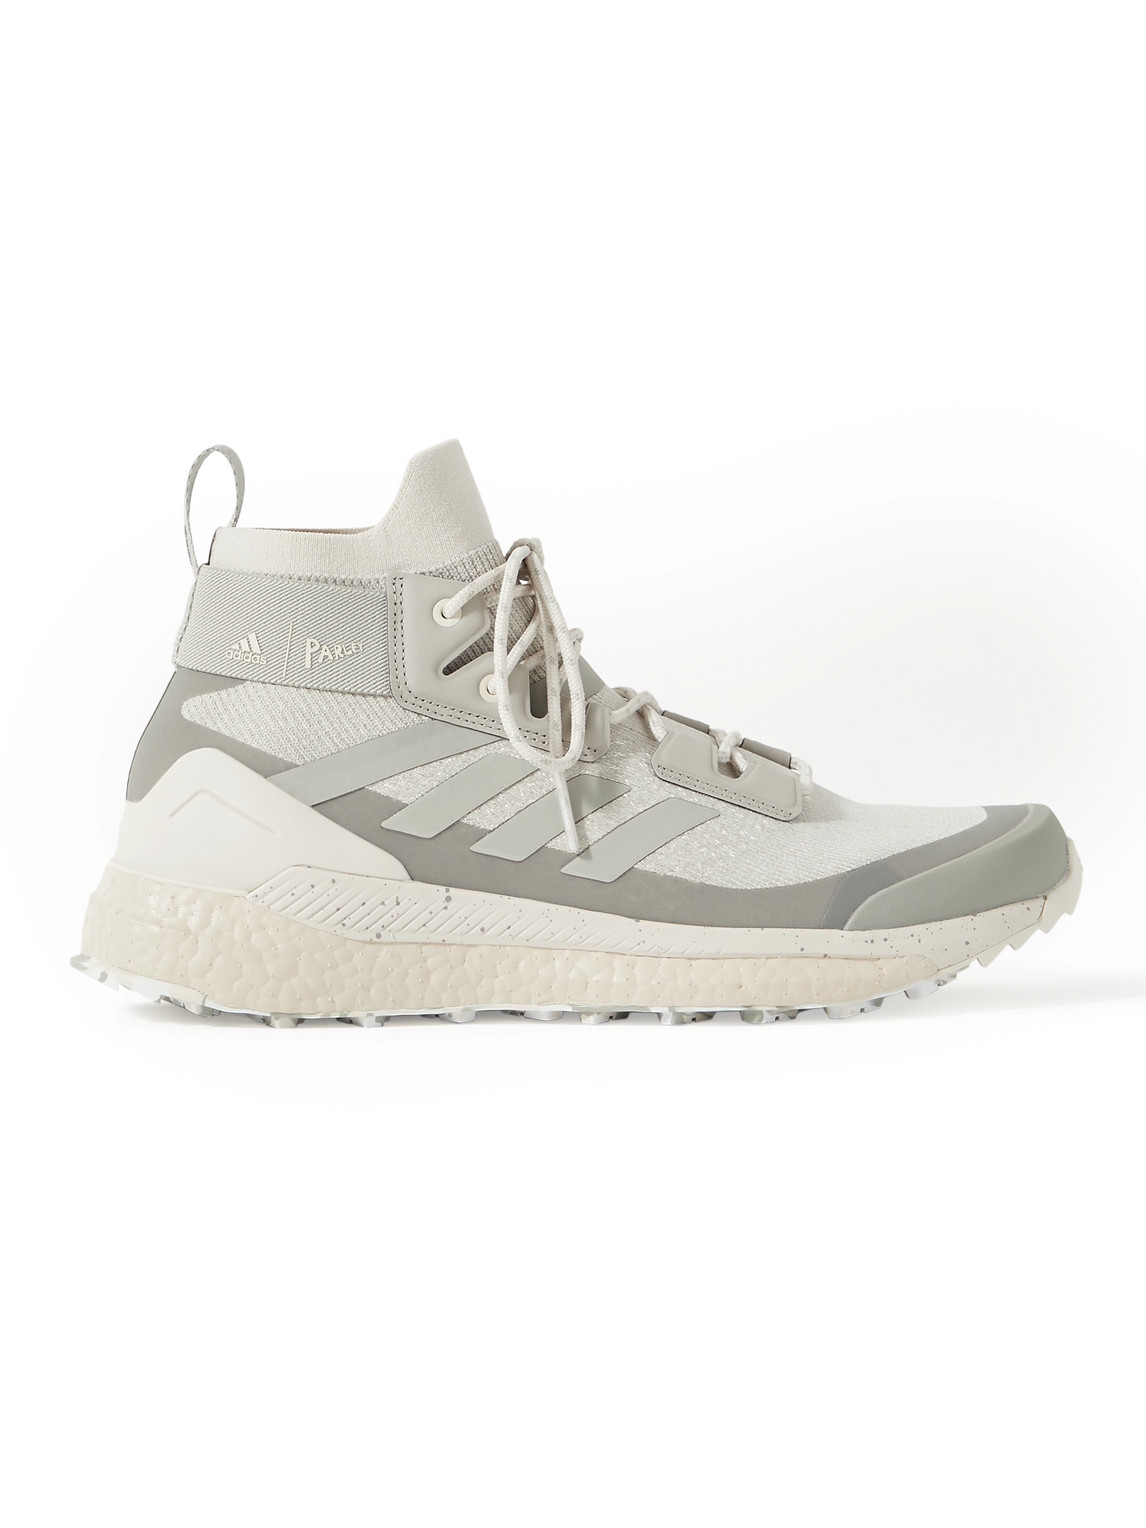 Adidas Consortium Parley Terrex Free Hiker Primeknit Sneakers In Gray